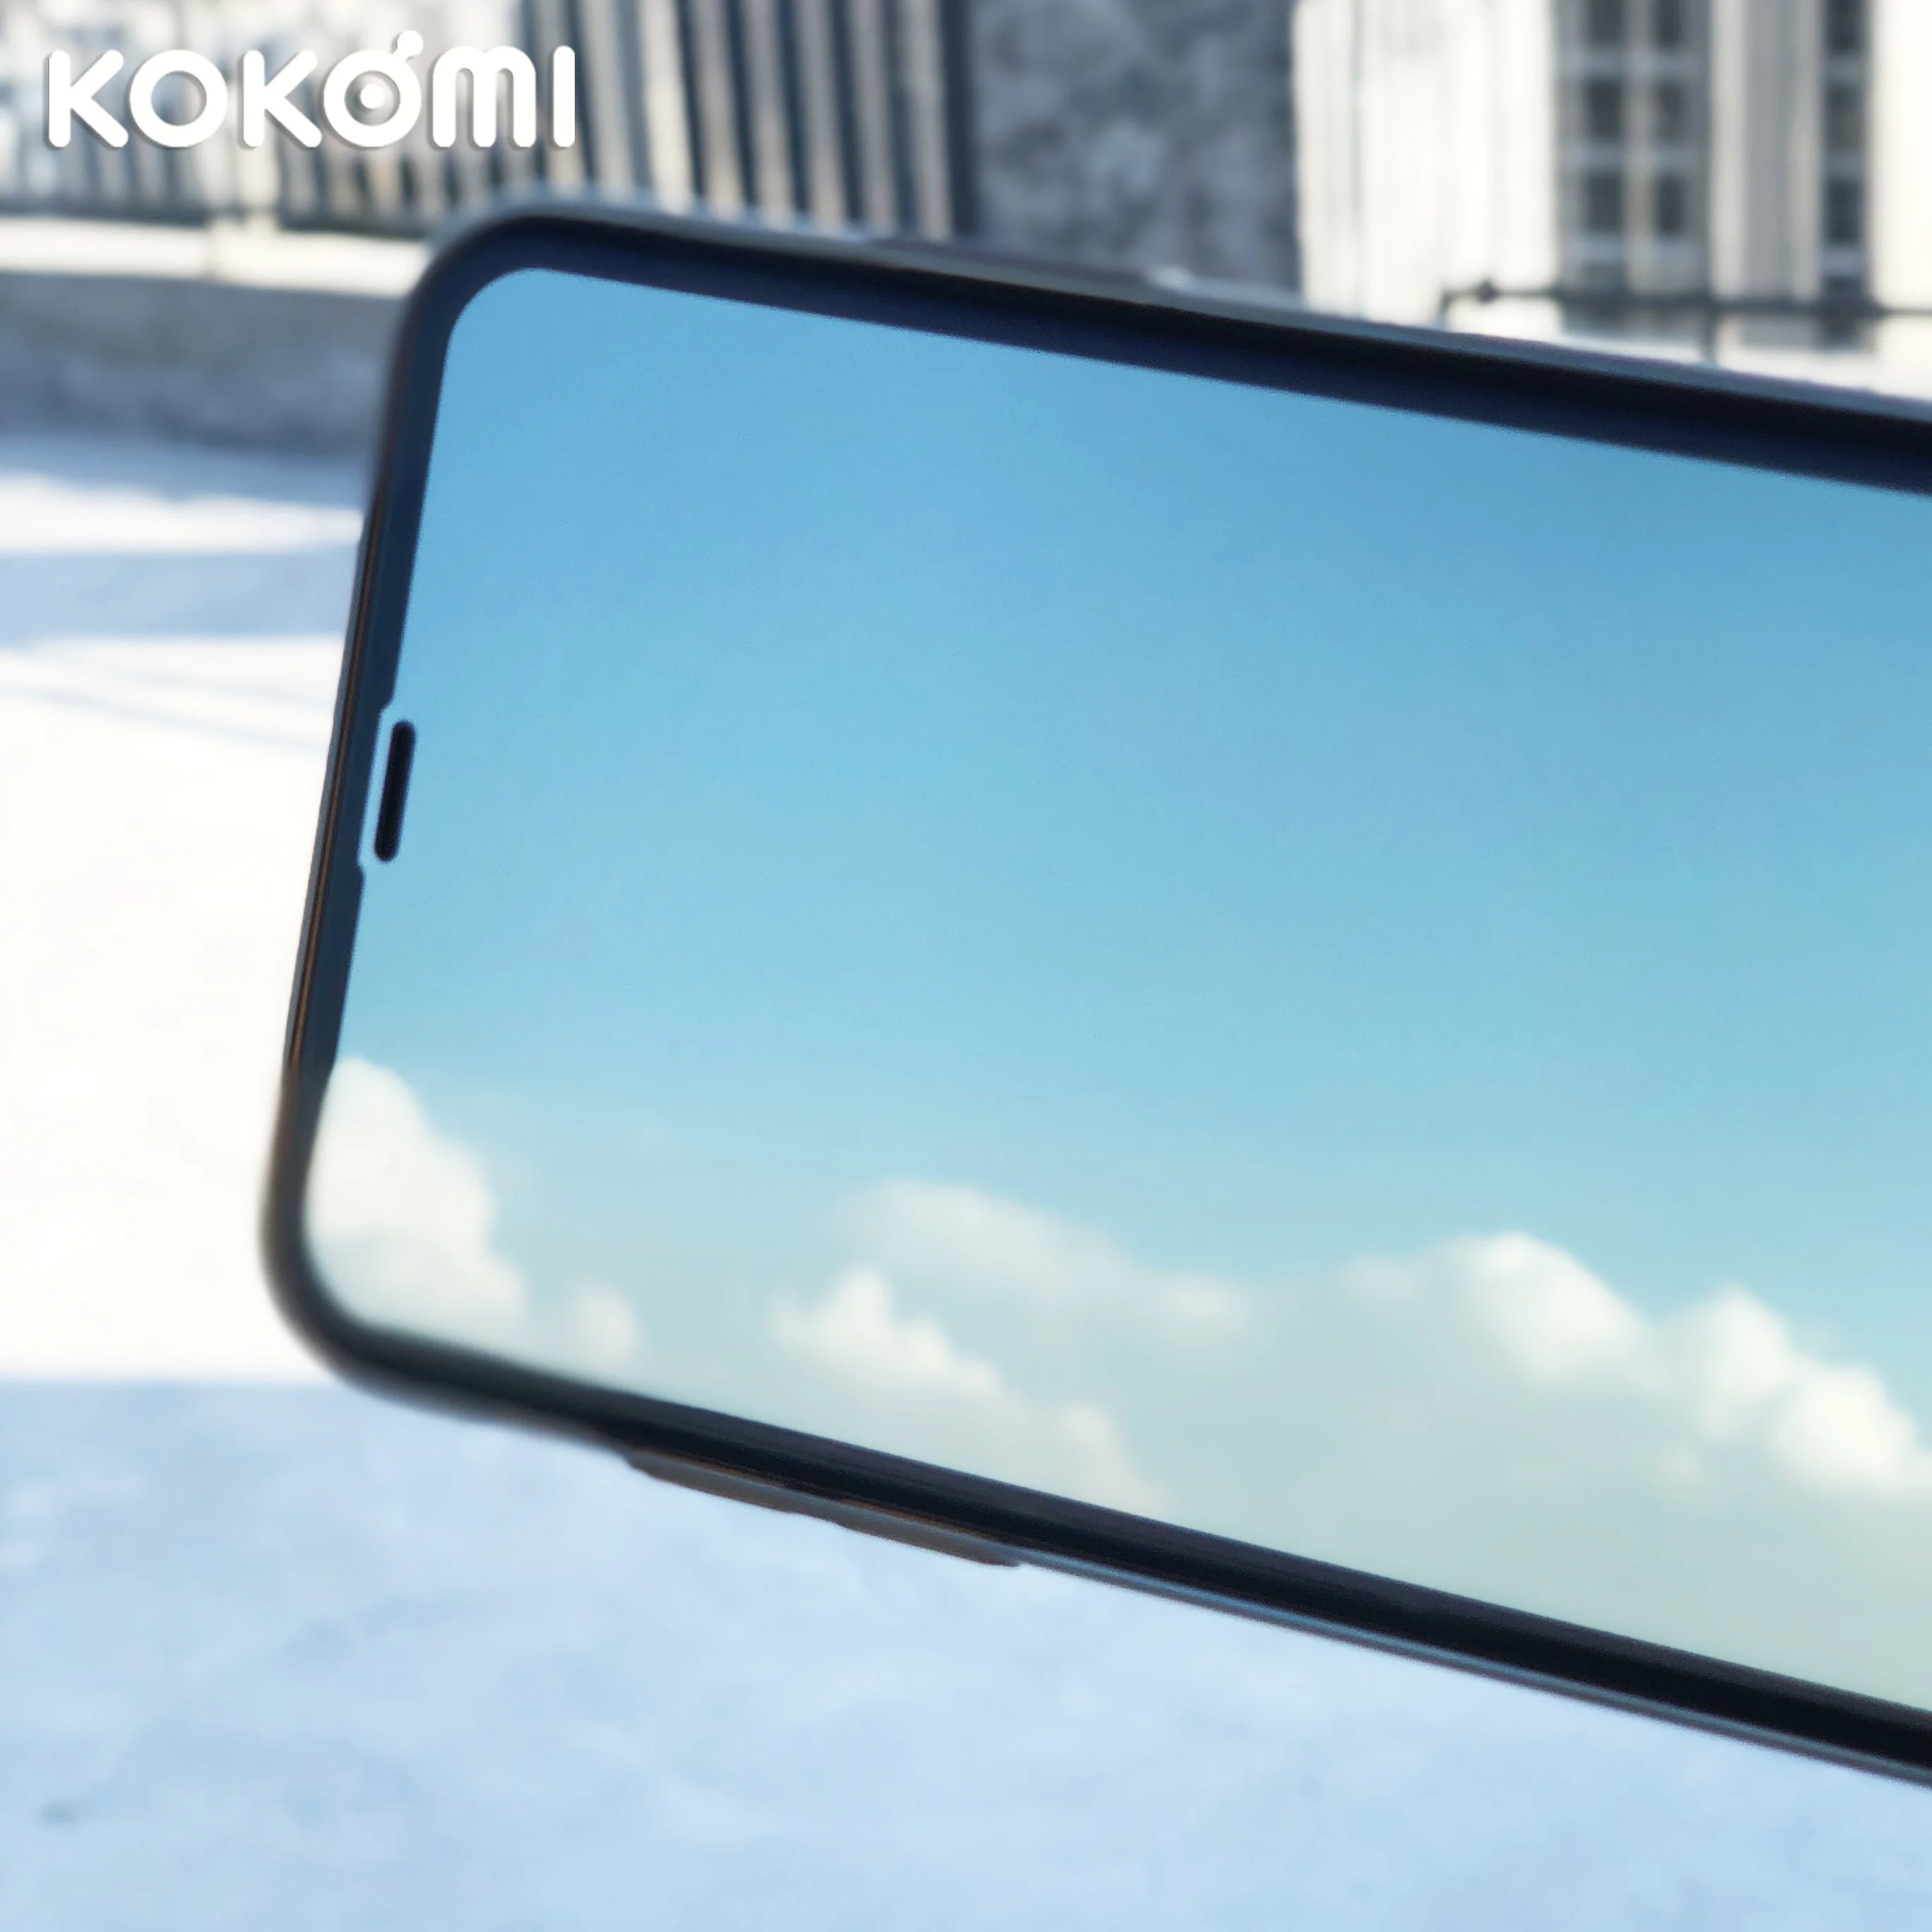 KOKOMI new 3D tempered glass  mirror screen protector  for iphone X XS Max